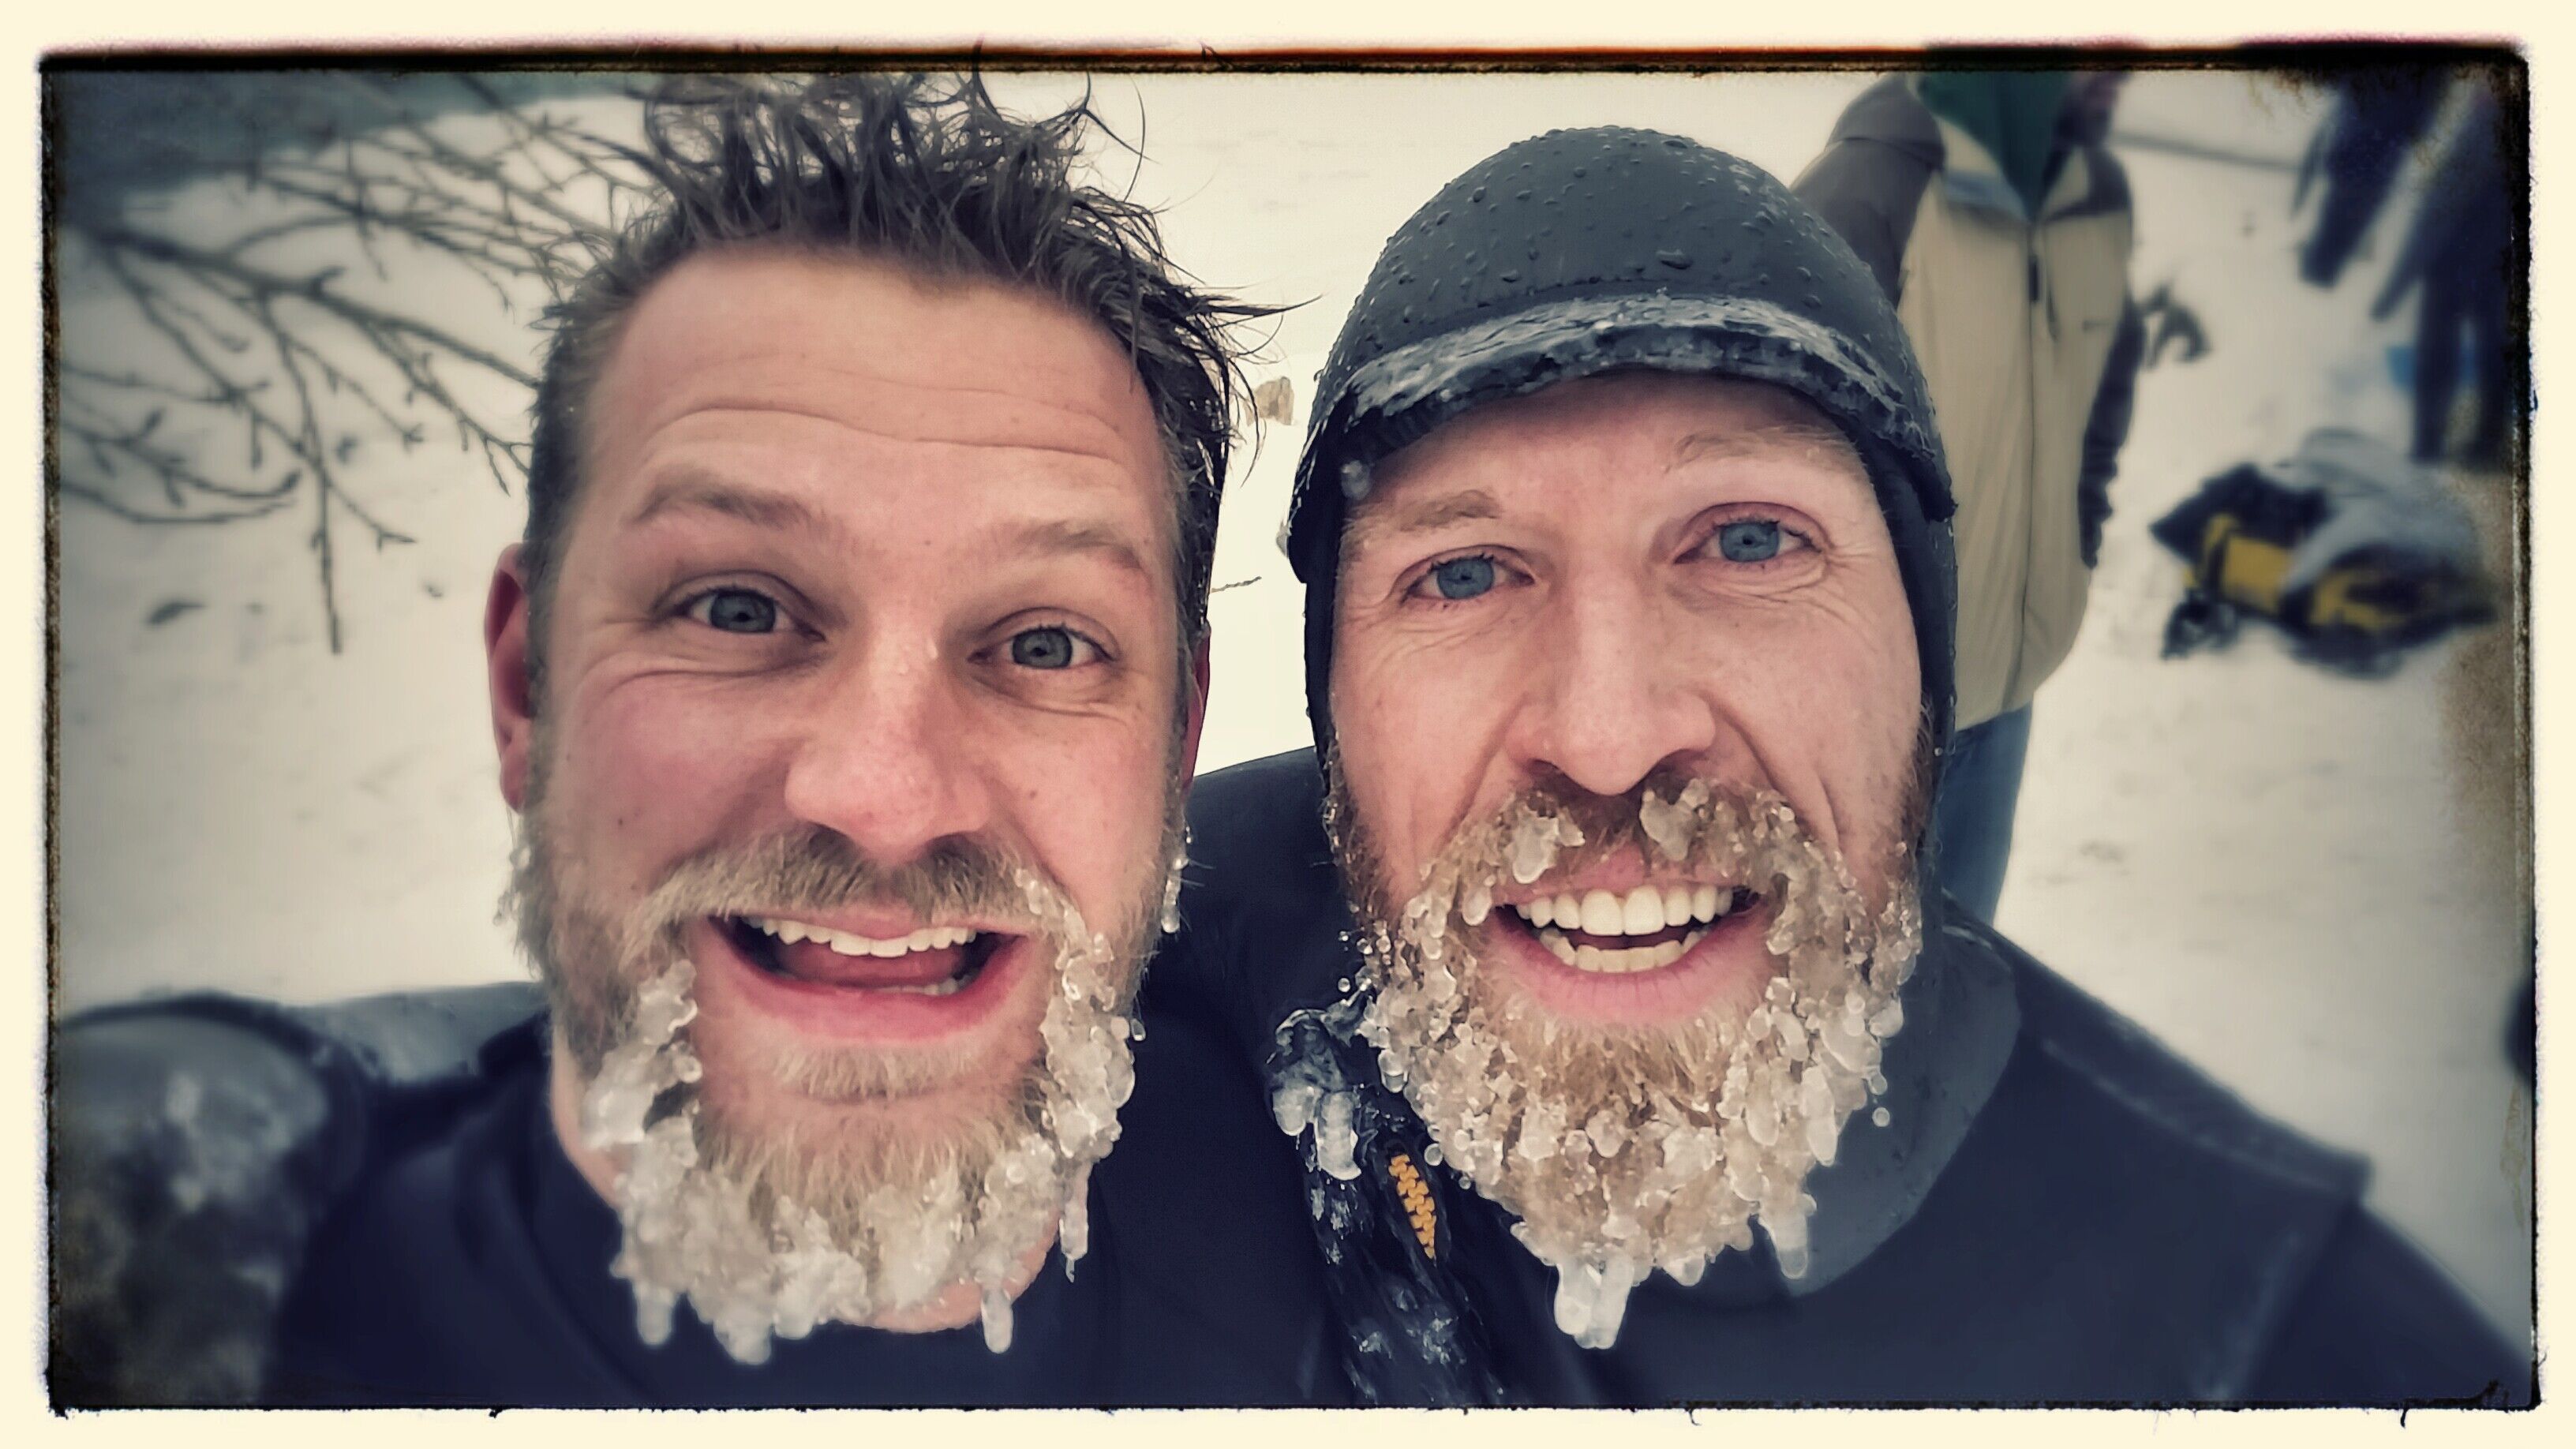 010 - Quinlan & Adam Baranec with Winter Beards (Quinlan)